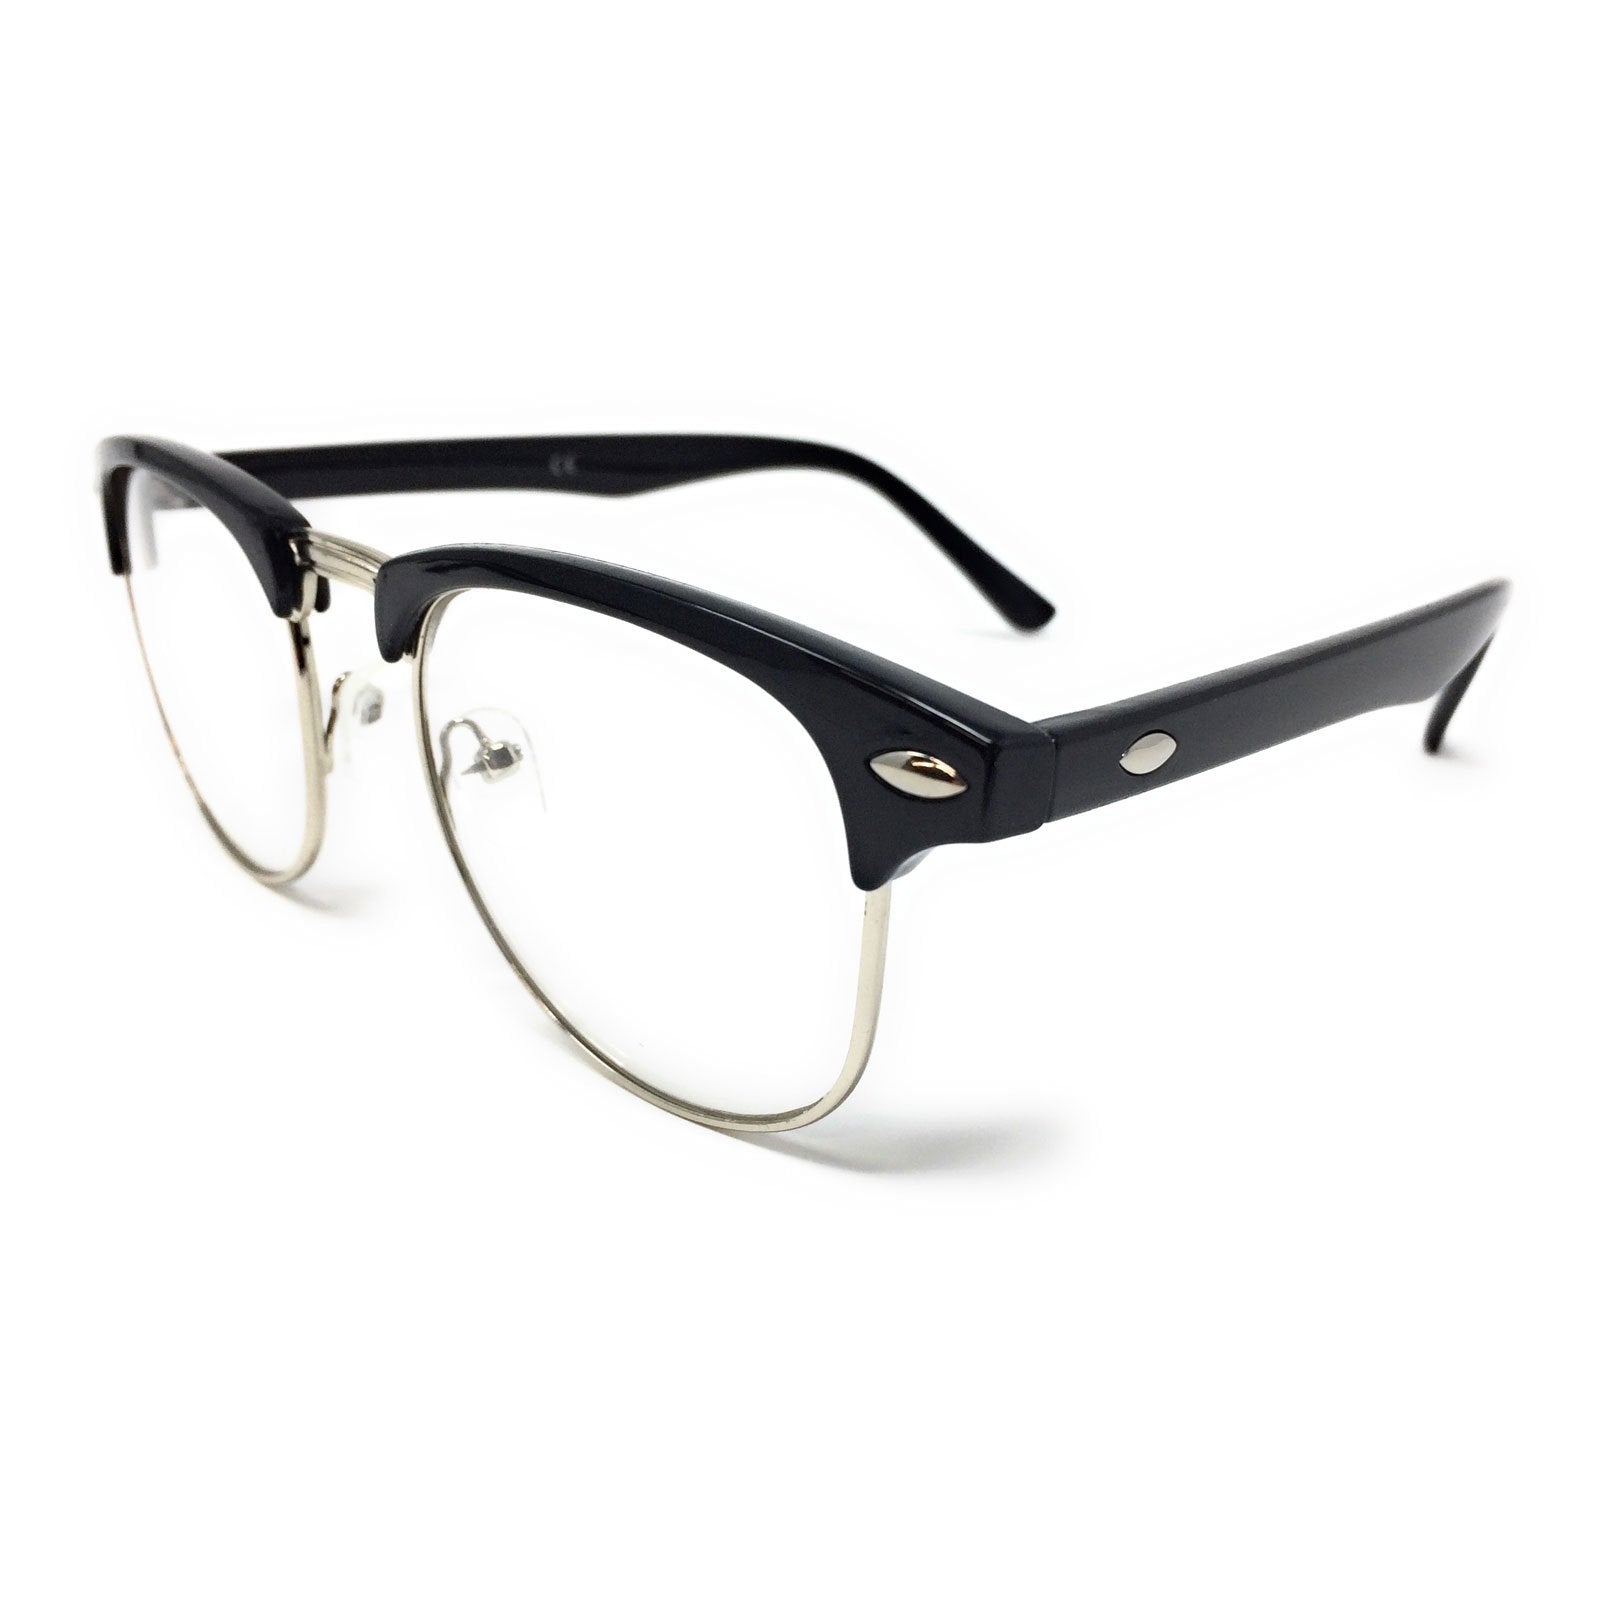 Wholesale Kids 1950s Half Rim Clear Lens Glasses - Black Frame